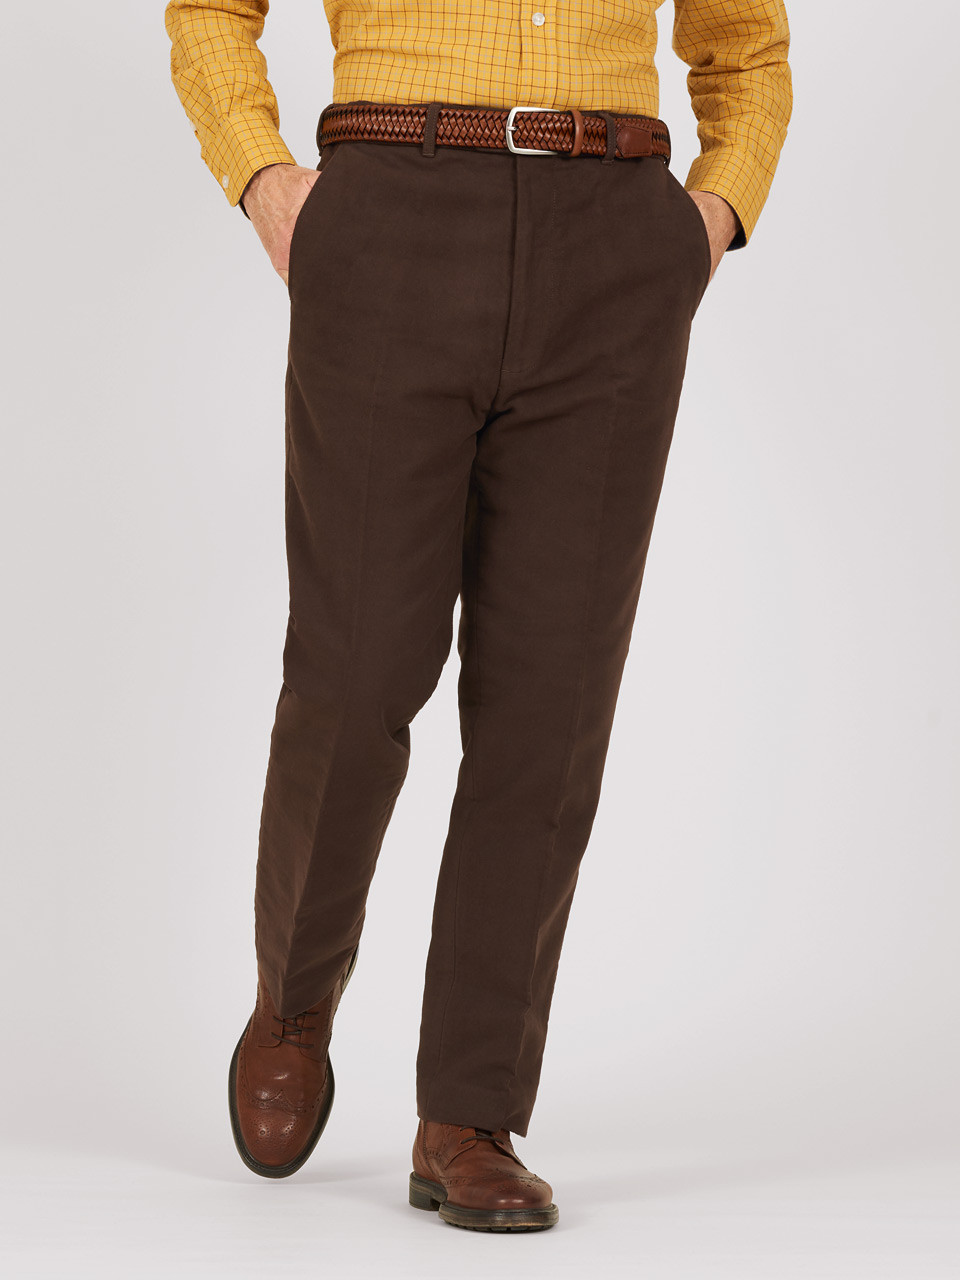 The Brown Moleskin 5 Pocket Custom Pant